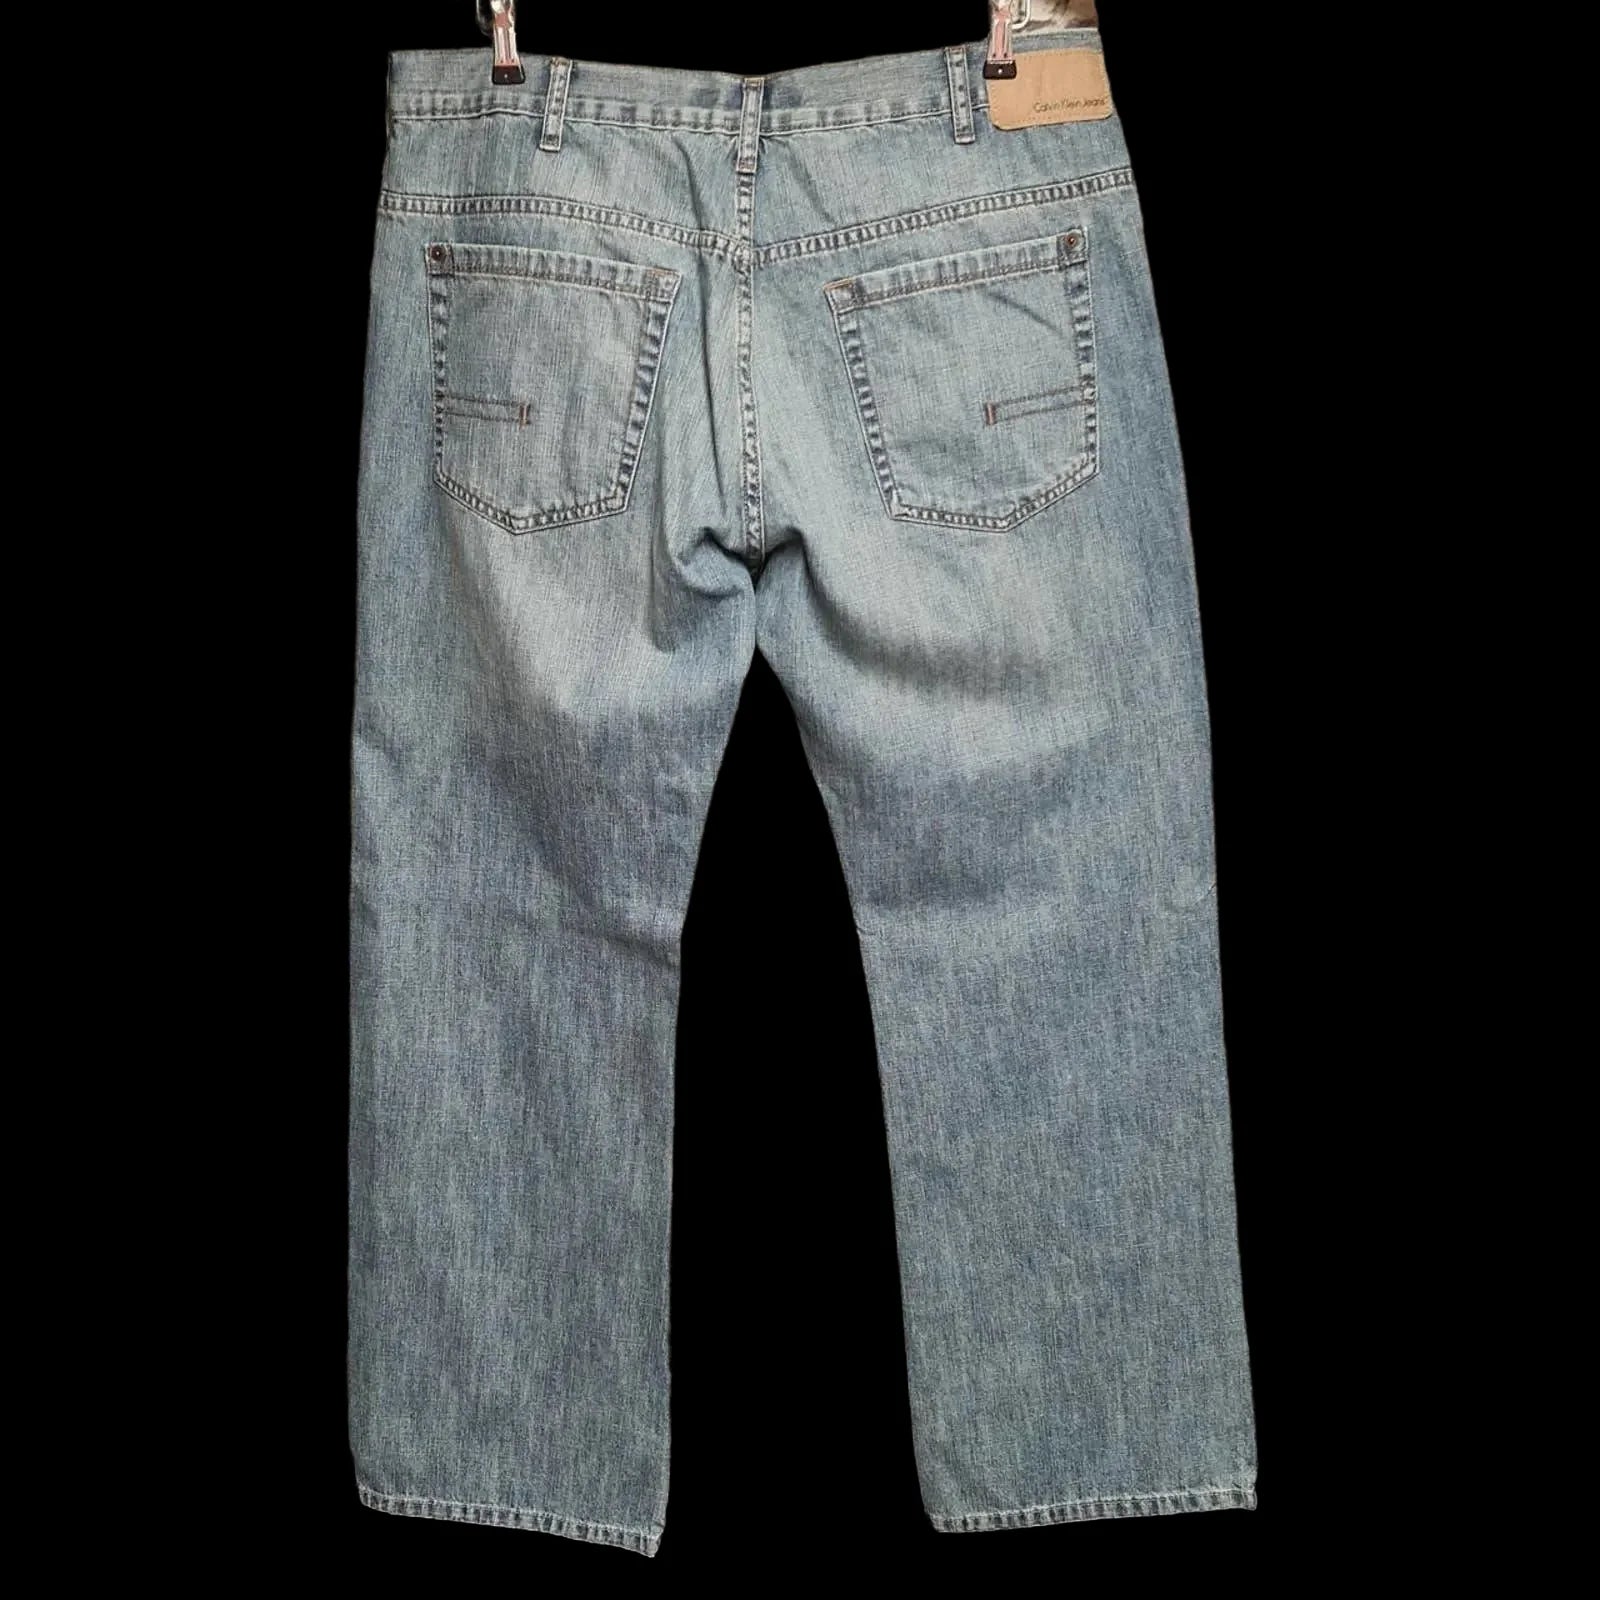 Mens Calvin Klein Blue Jeans W36 L30 - 2 - 687